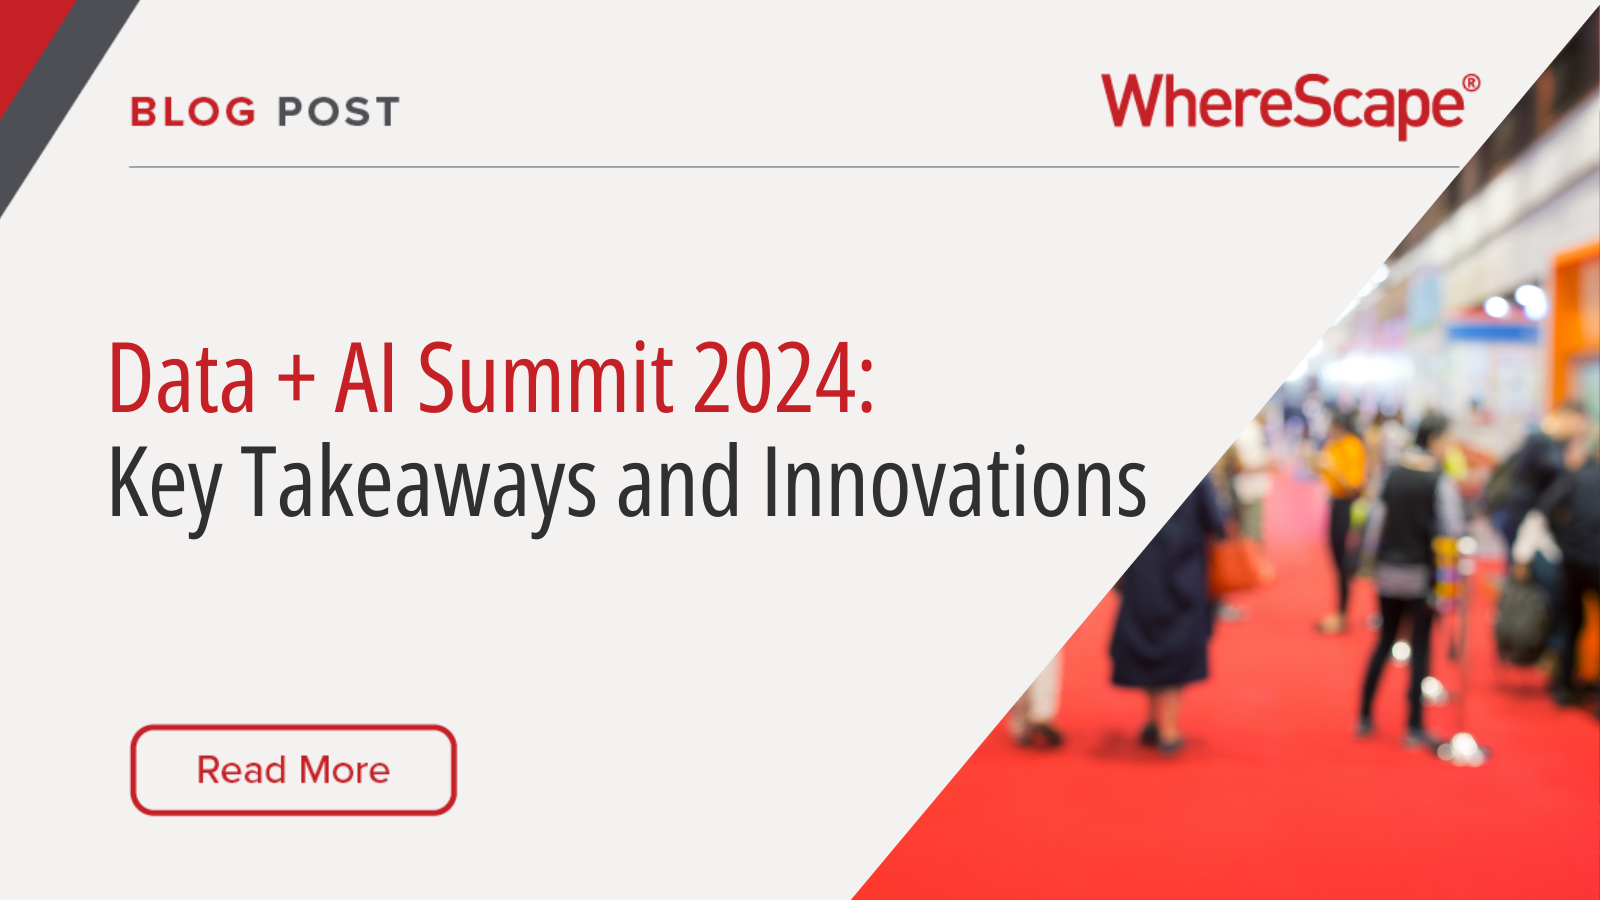 Data + AI Summit 2024: Key Takeaways and Innovations